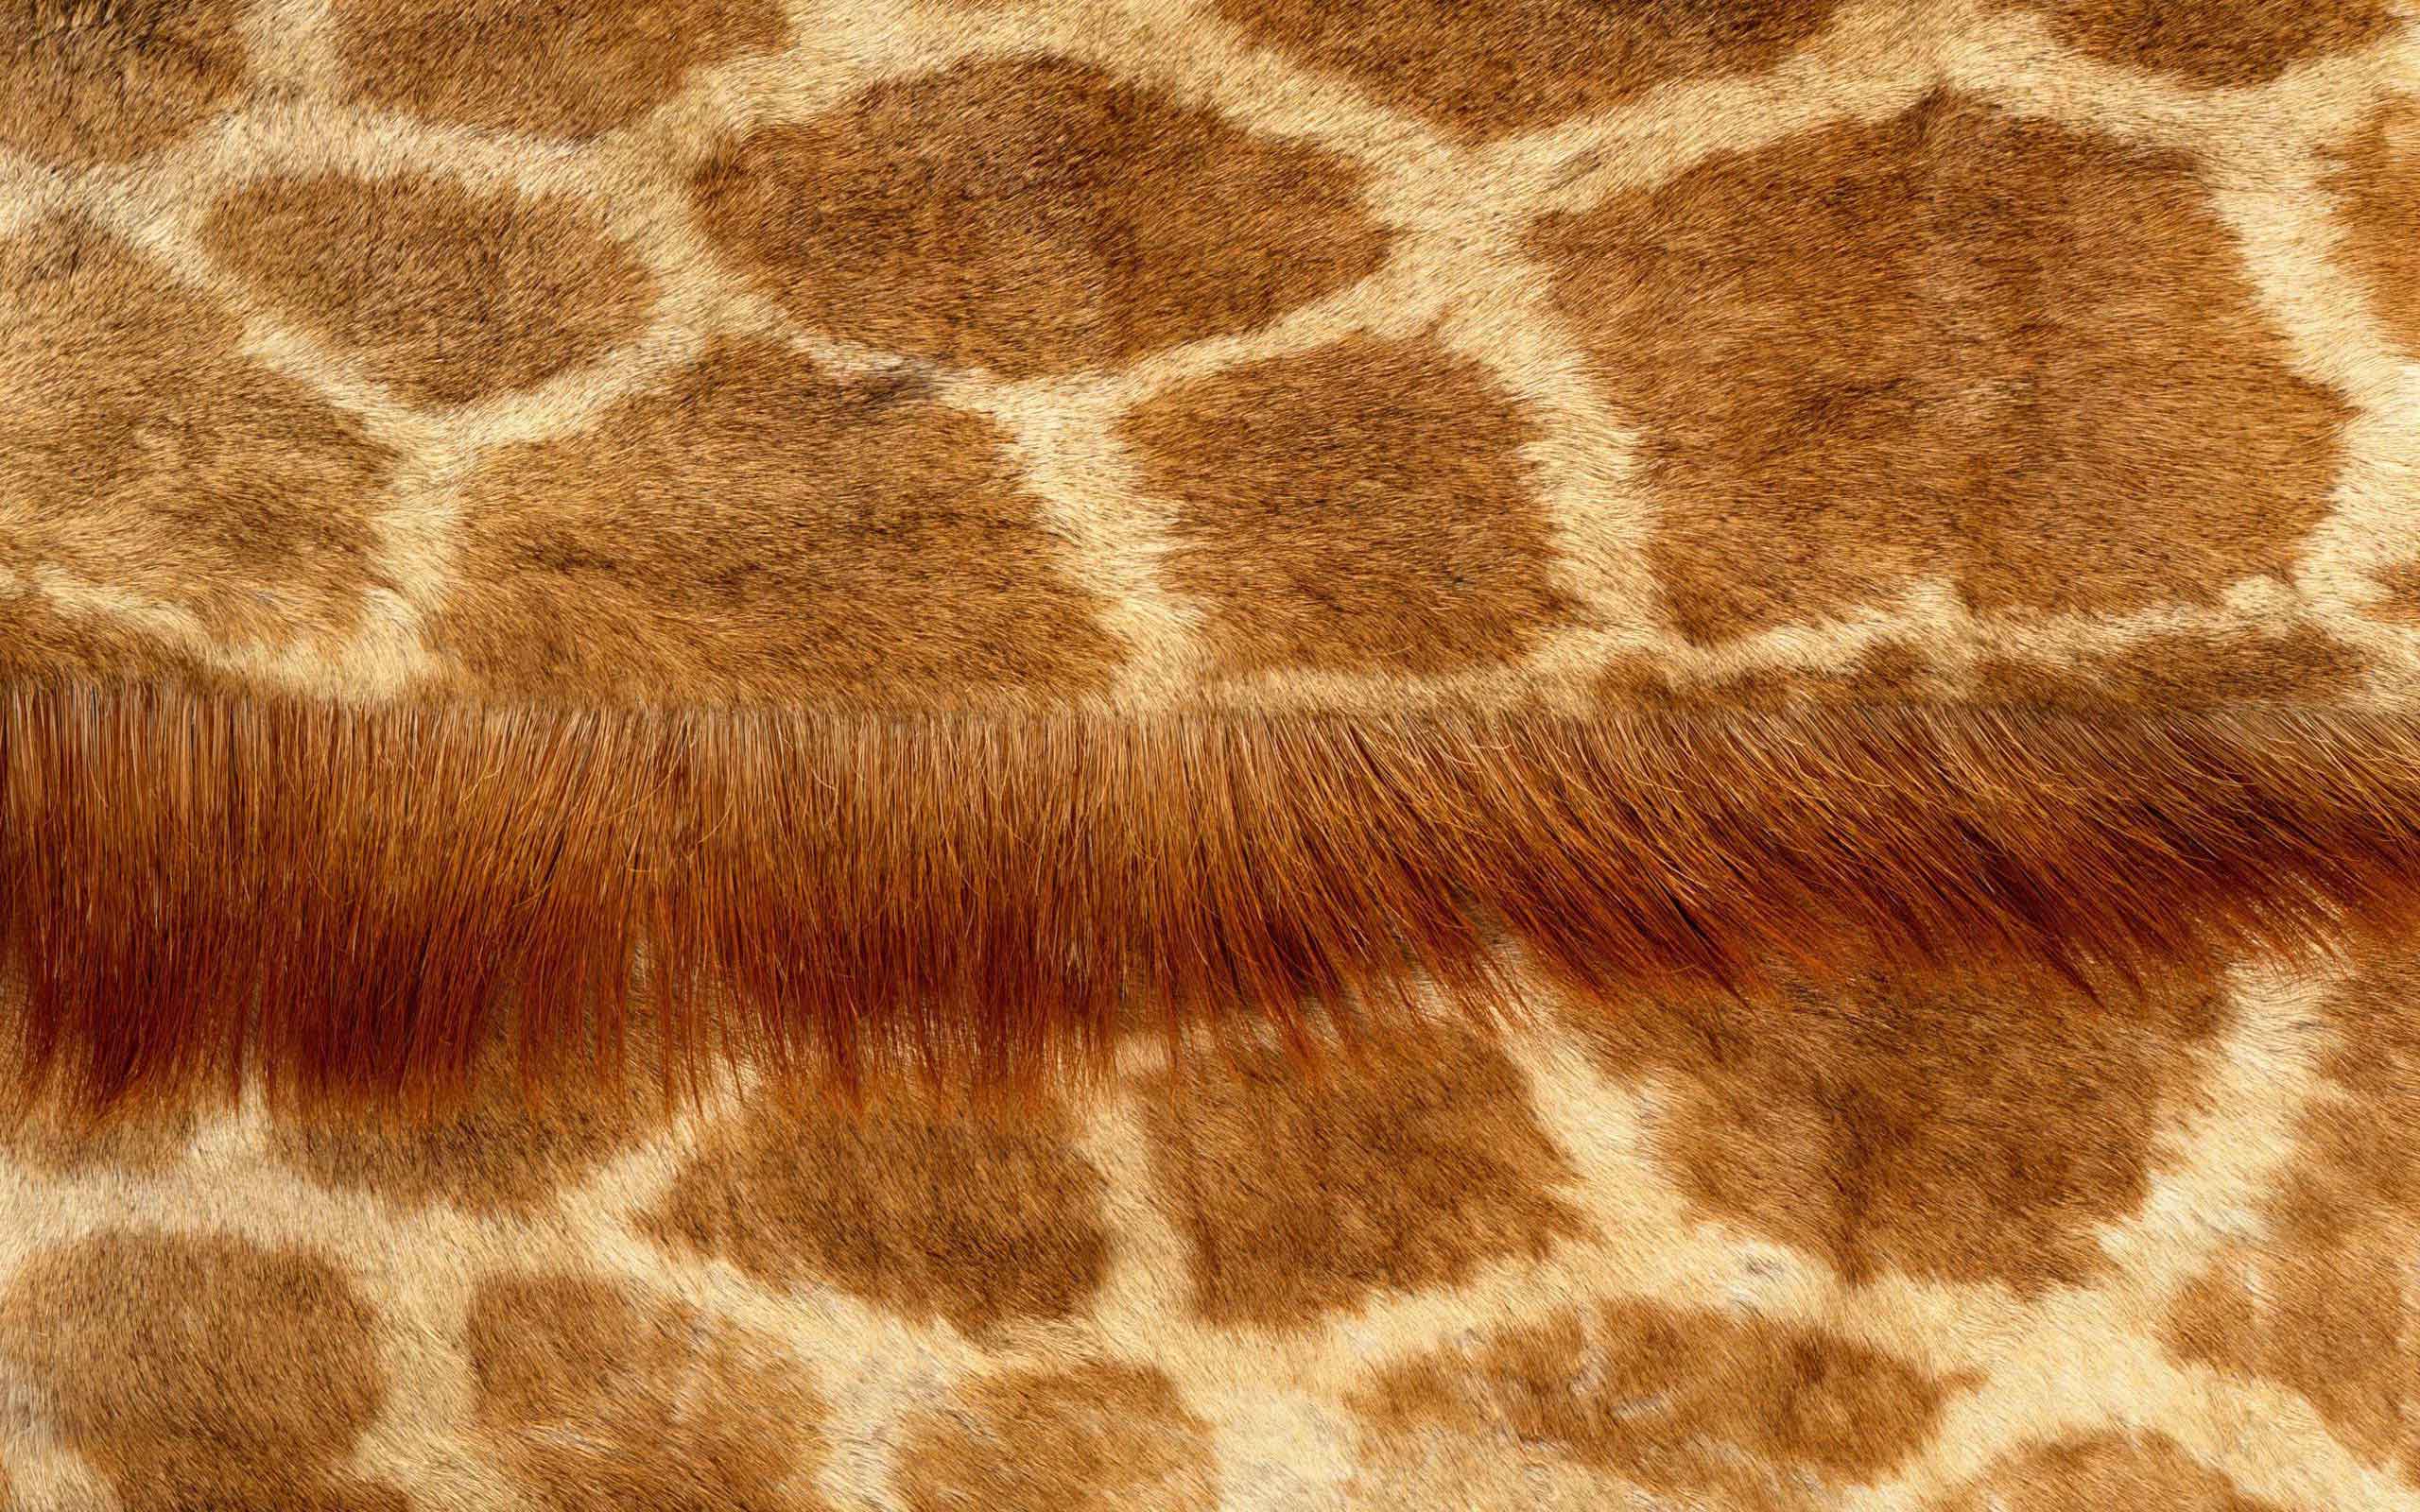 Desktop backgrounds · Computers · Windows 7 Giraffe skin pattern